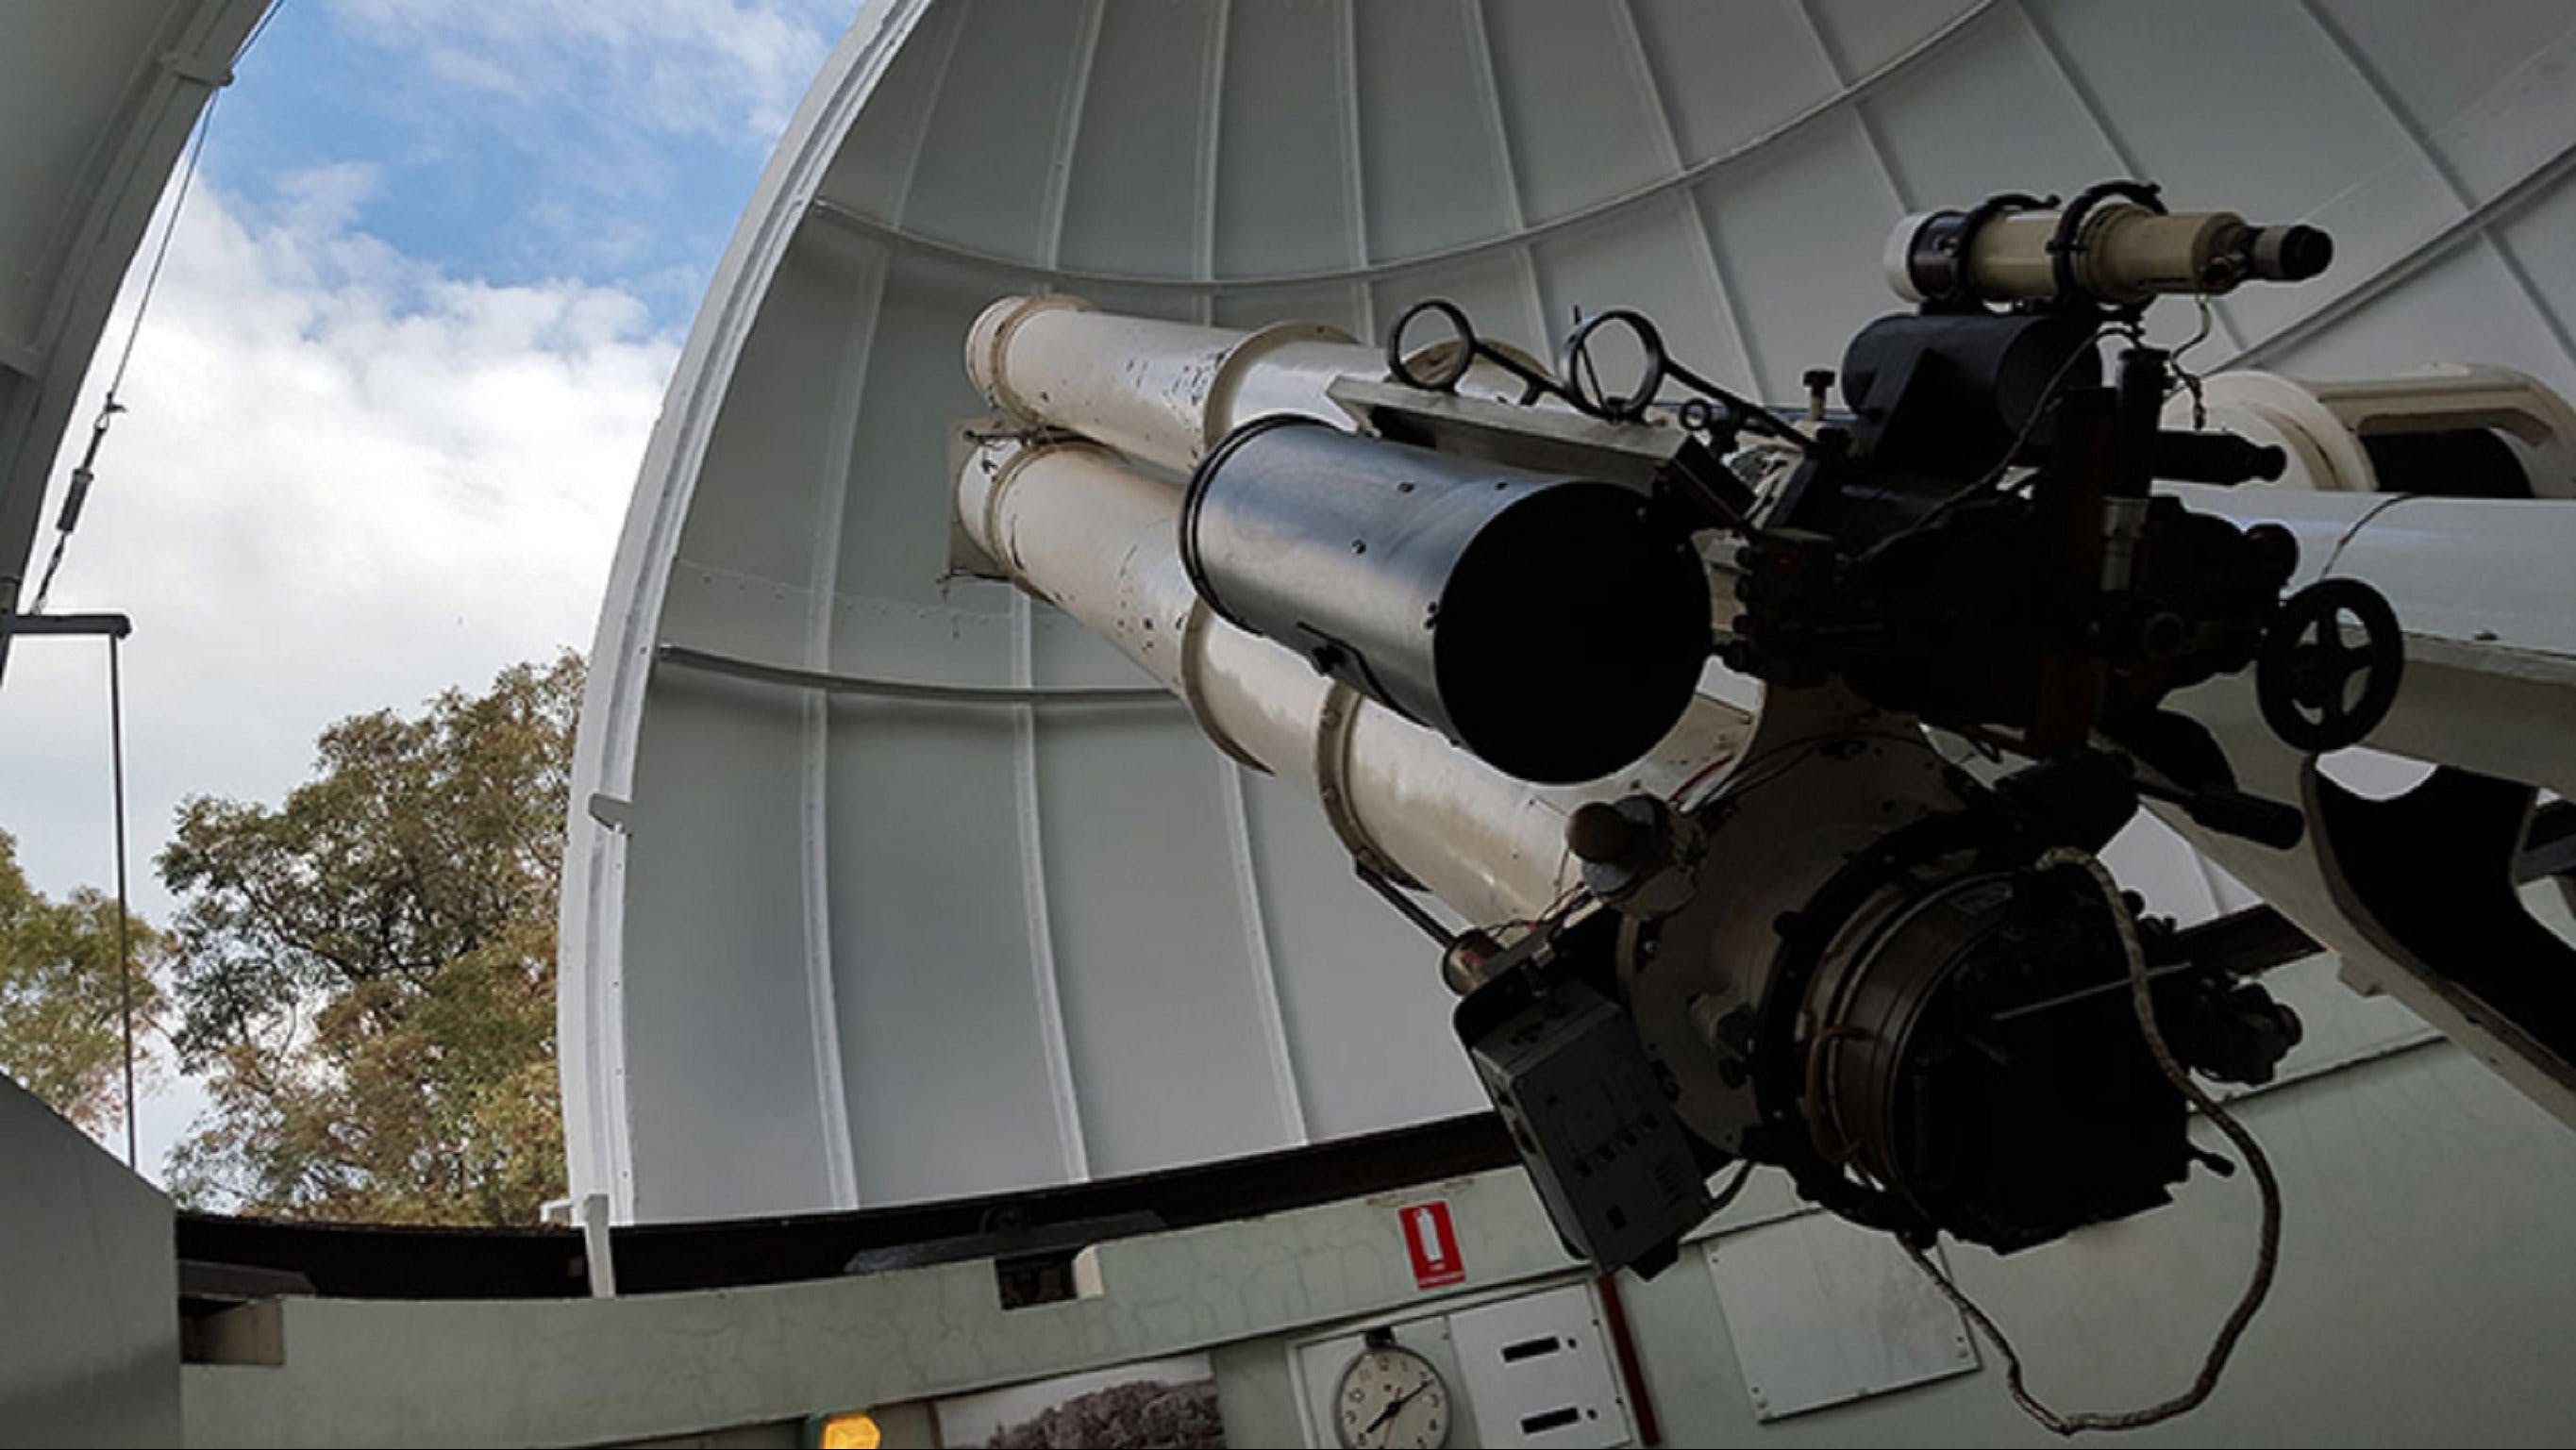 Perth Observatory - thumb 2